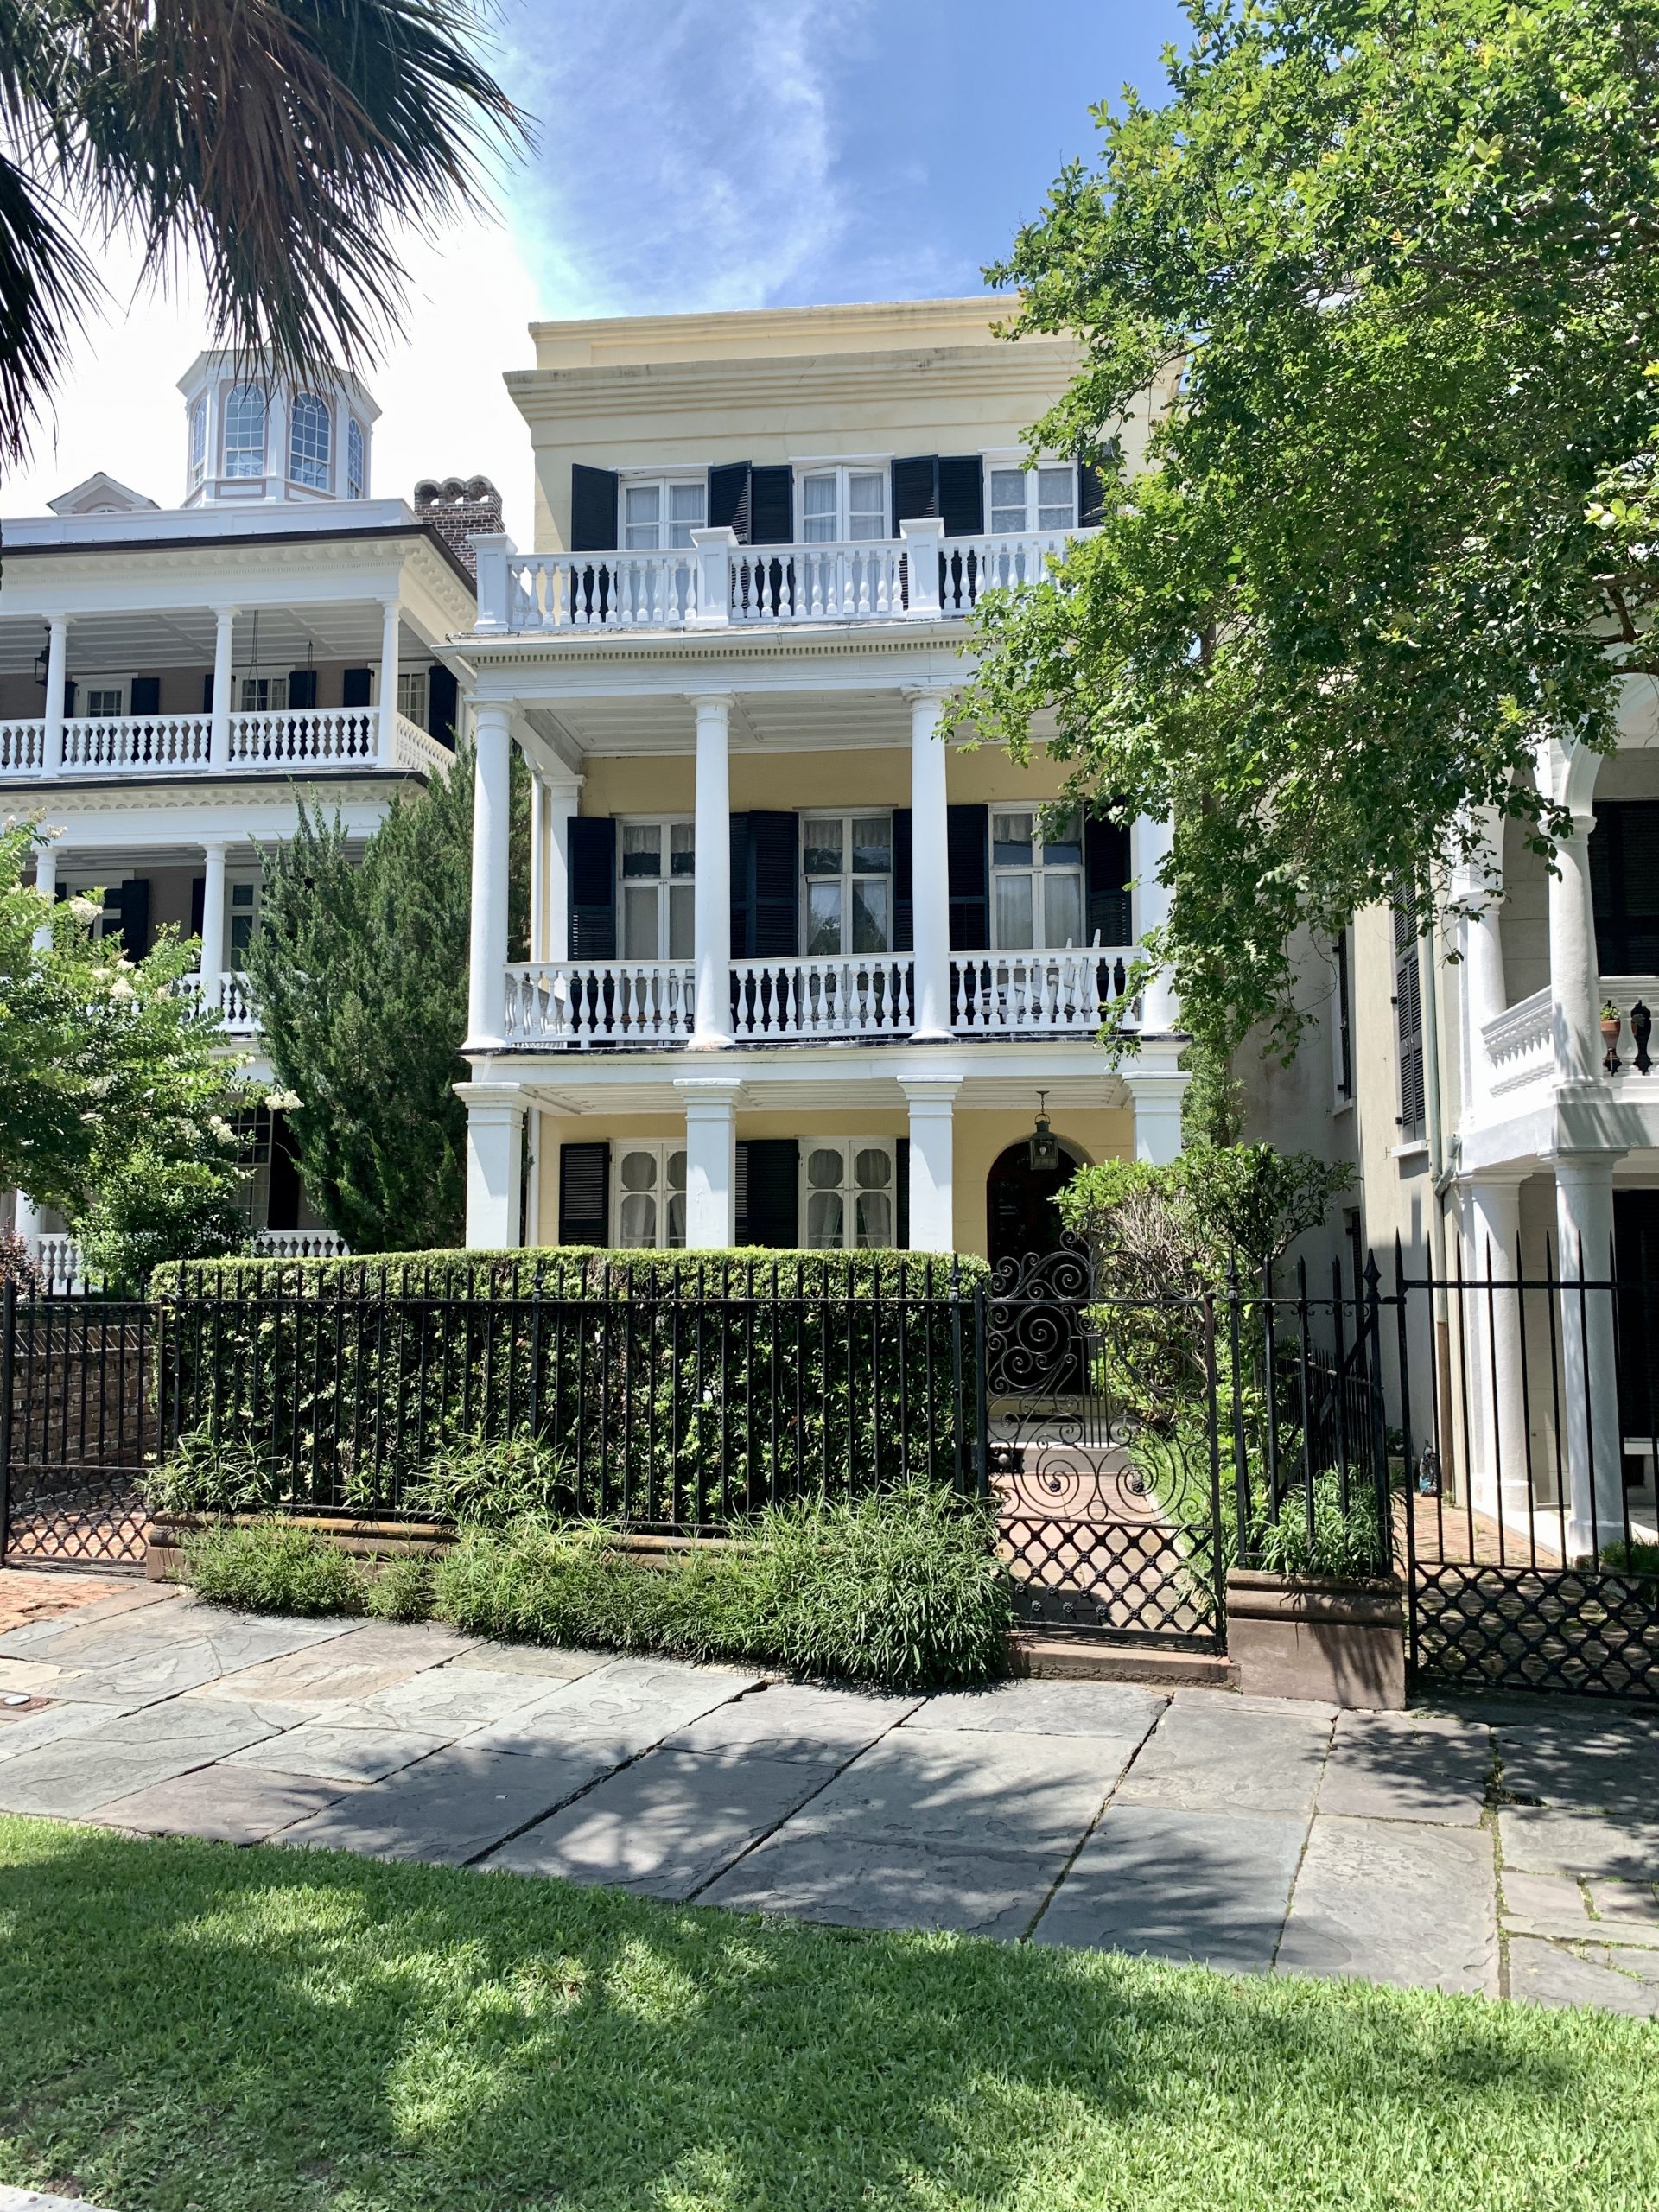 Charleston Homes